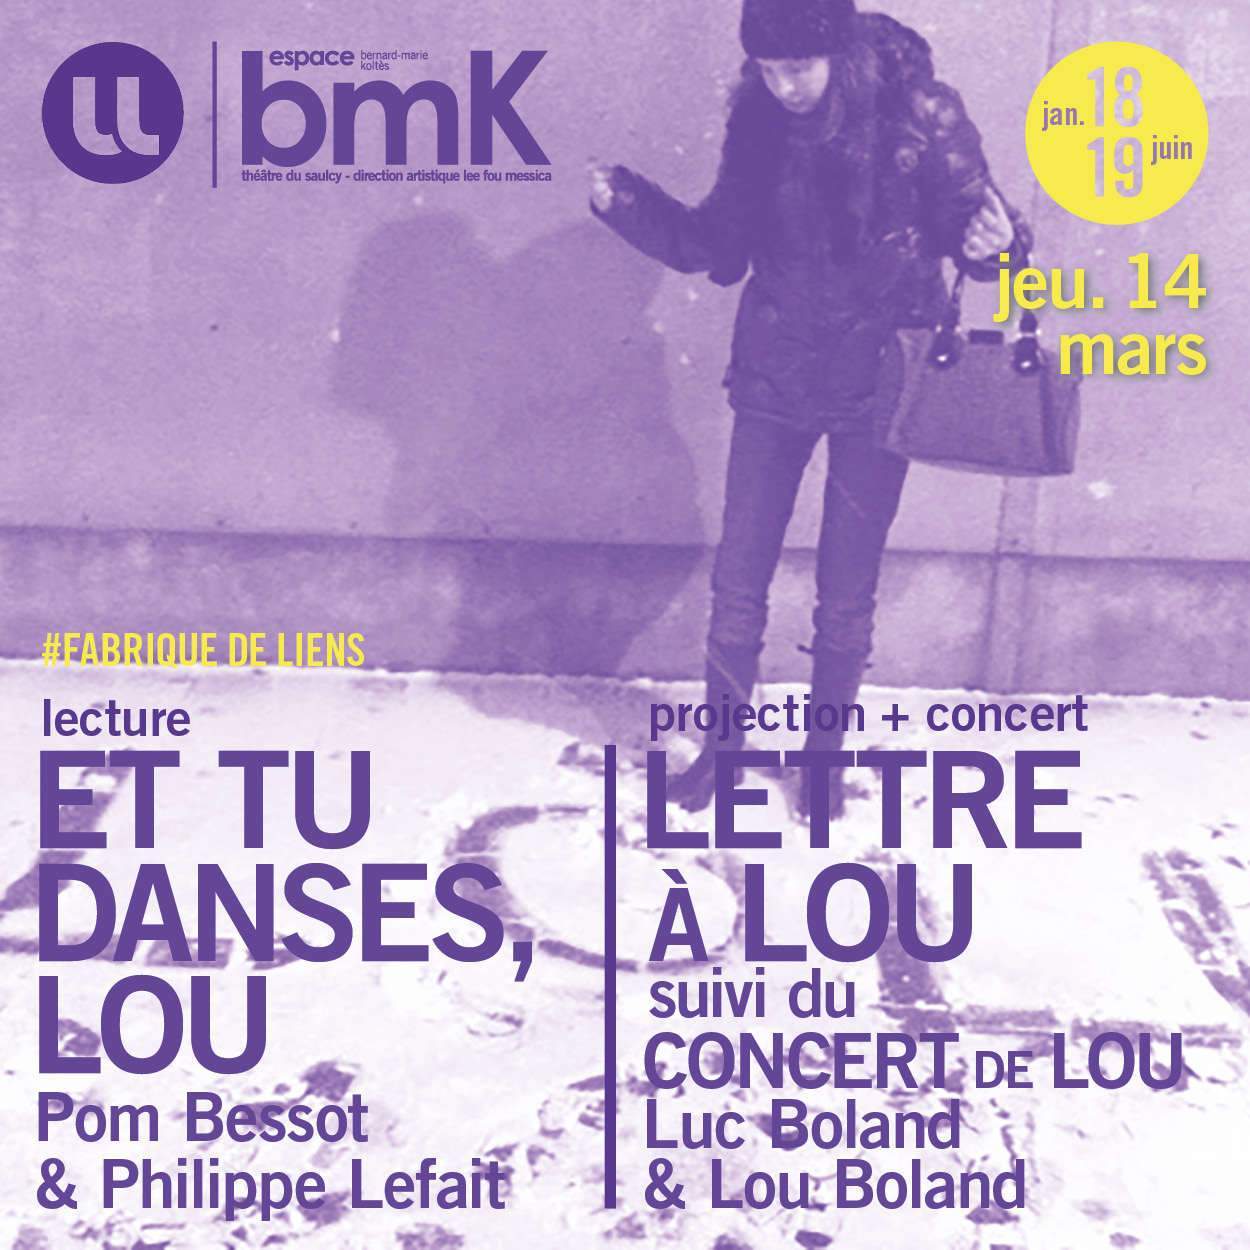 Spectacle Lou à Metz (affiche)